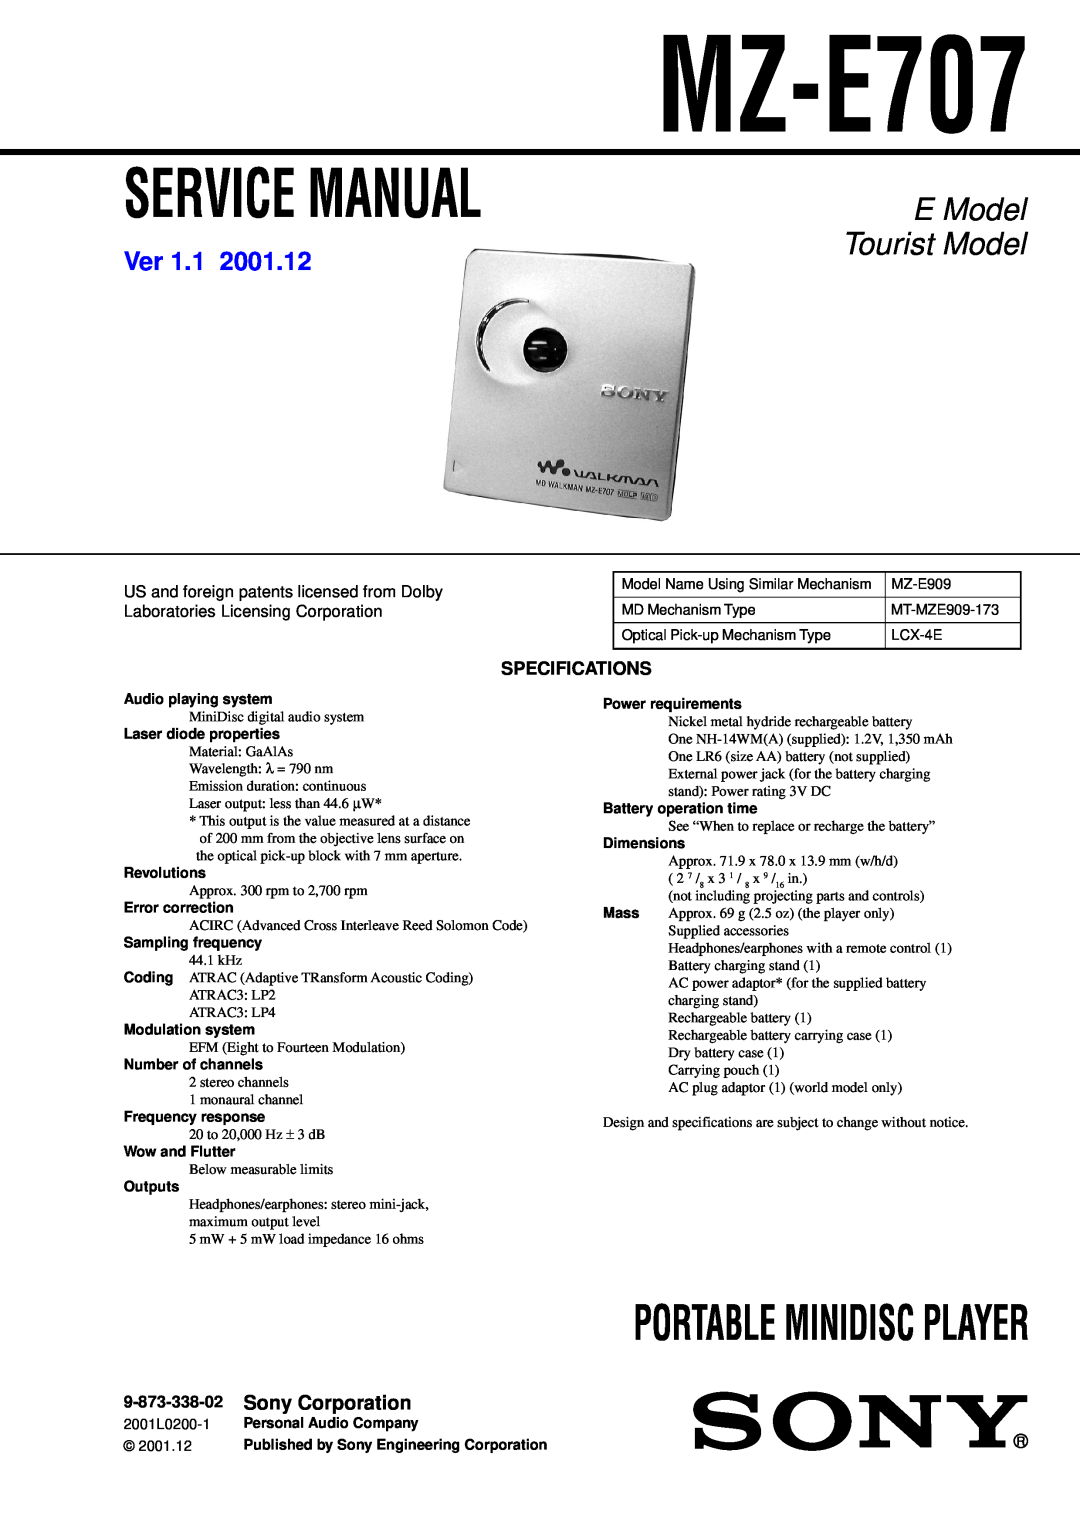 Sony MZ-E707 service manual Portable Minidisc Player, E Model, Tourist Model, Ver, Sony Corporation, 9-873-338-02, Outputs 